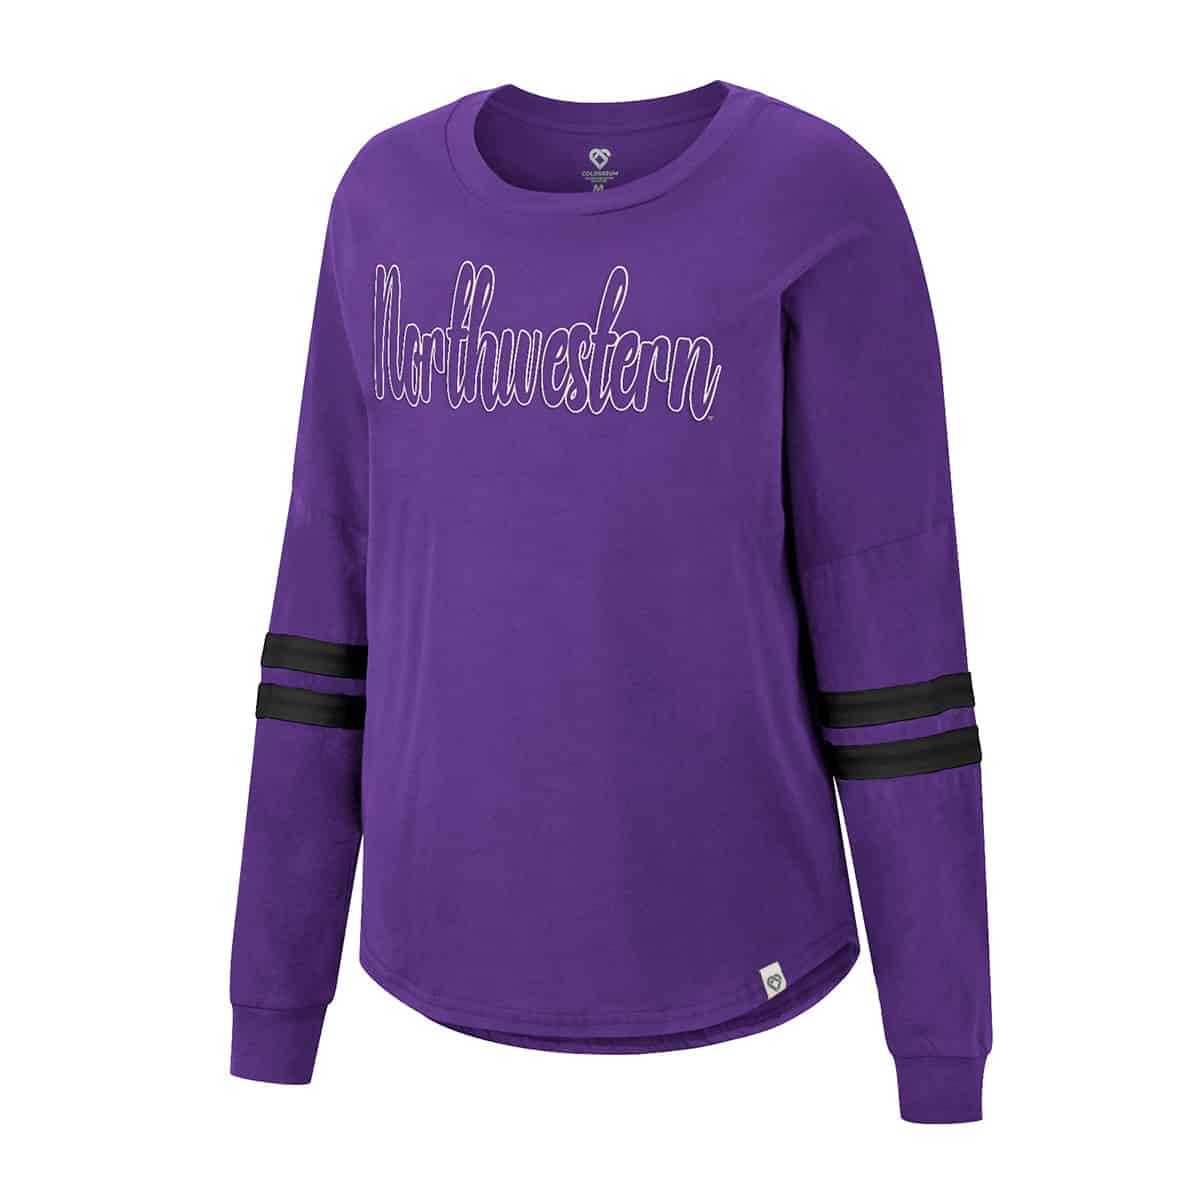 Northwestern University Wildcats Colosseum Men's Purple Mr. Plow Hockey  Jersey with N-Cat Design